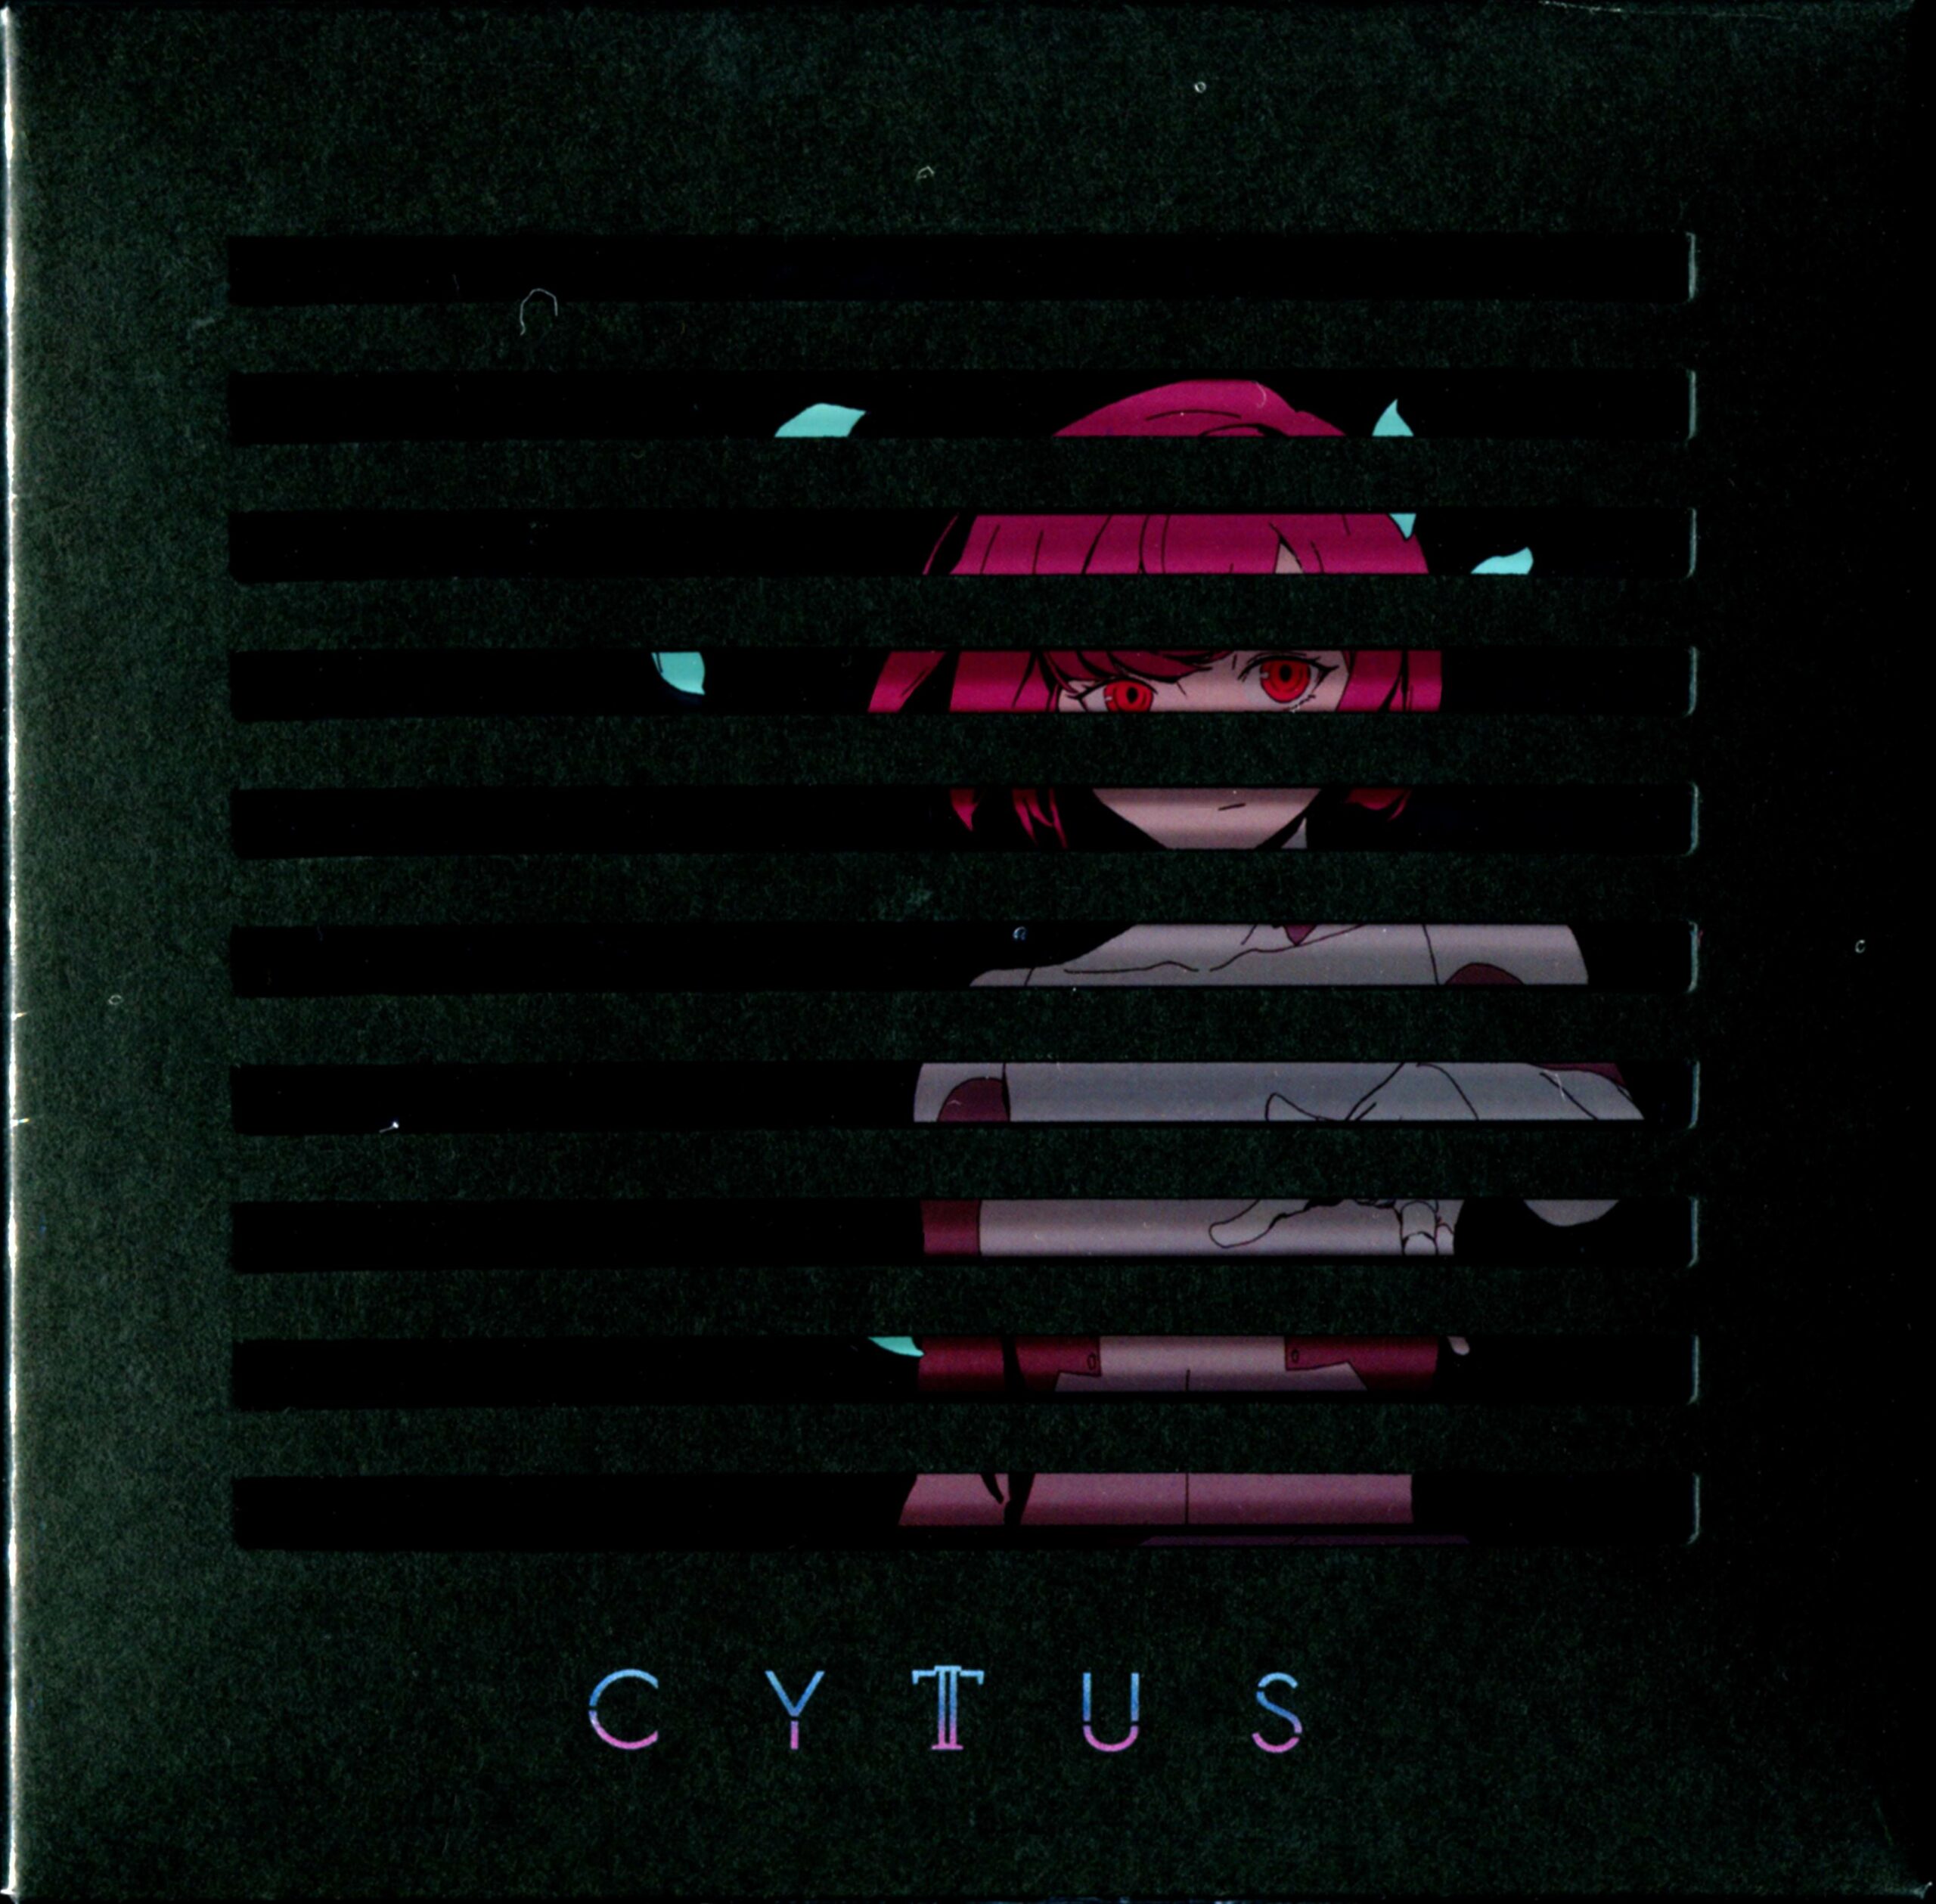 雷亚rayark《cytus ii original soundtracks – vanessa》[cd级无损/44.1khz/16bit]